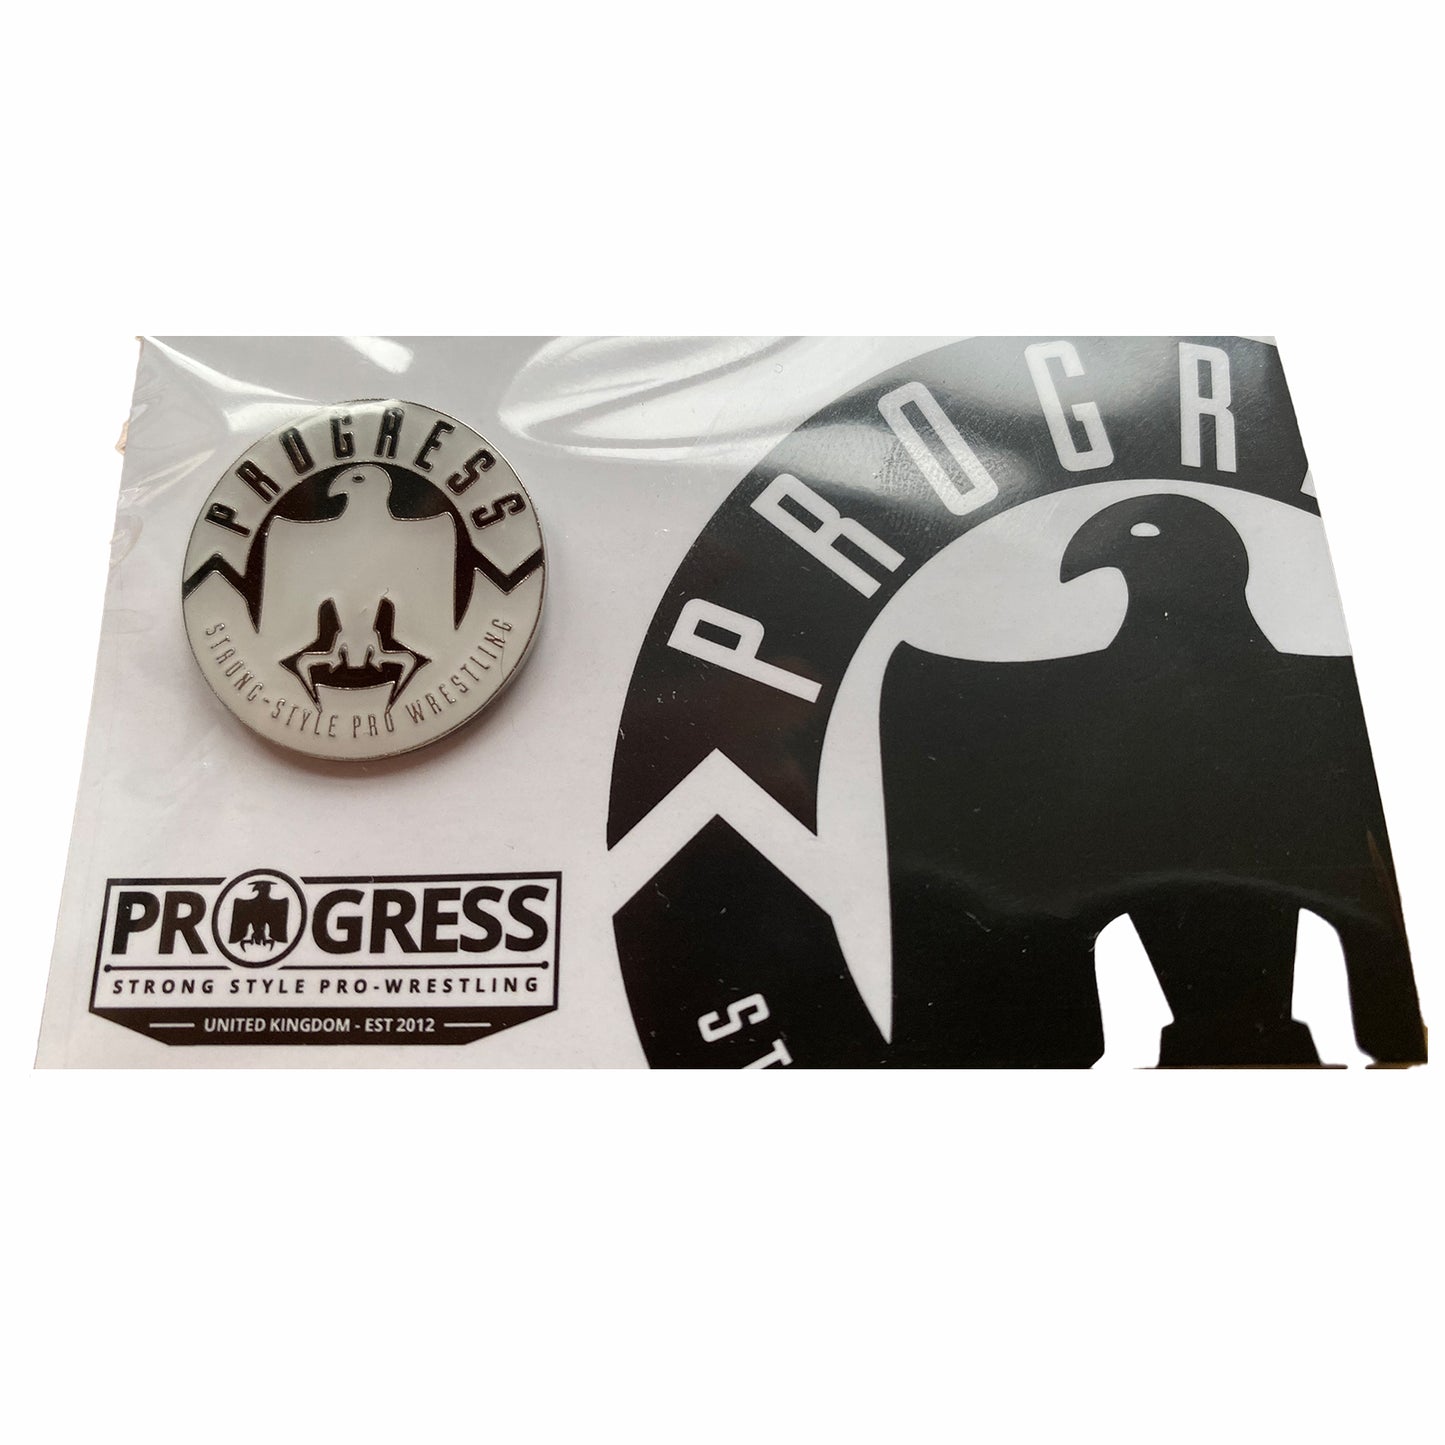 PROGRESS Wrestling Accessories - Regal Eagle Pin Badge